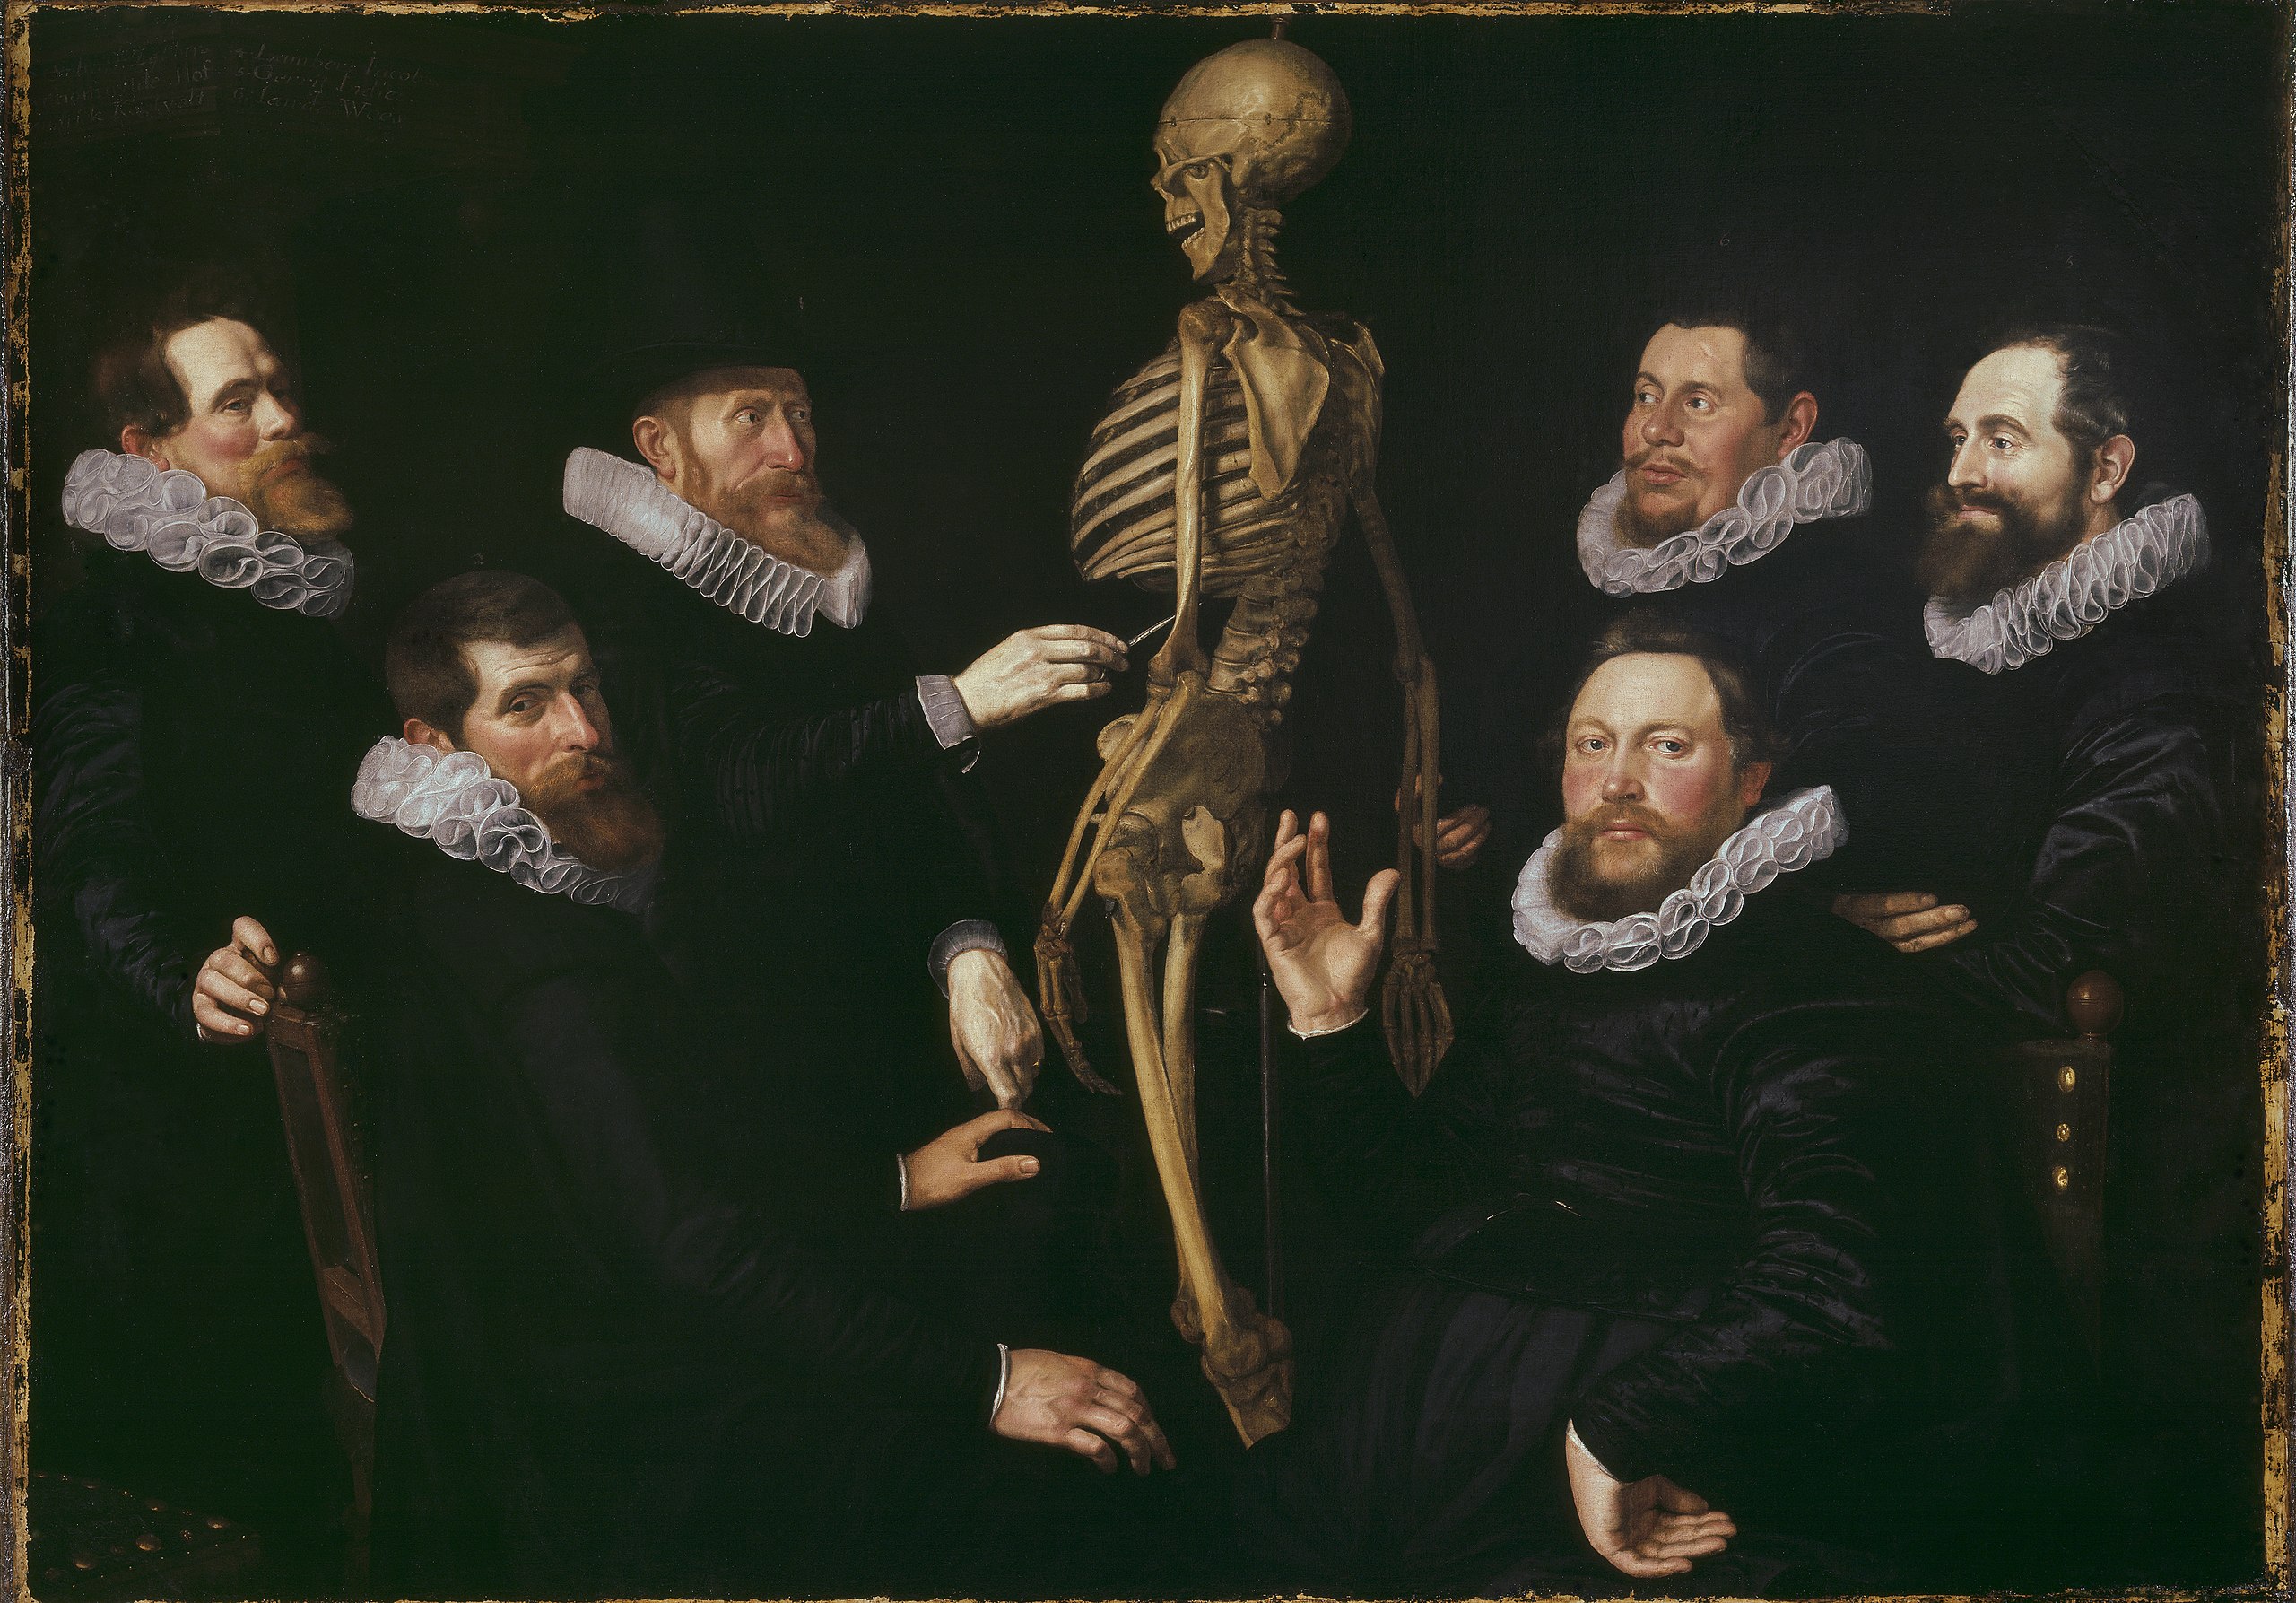 Thomas de Keyser or Nicolaes Eliaszoon Pickenoy, The Osteology Lesson of Dr. Sebastiaen Egbertsz, 1619, oil on canvas, 135 x 186 cm (Amsterdam Historical Museum; photo: Never covered)